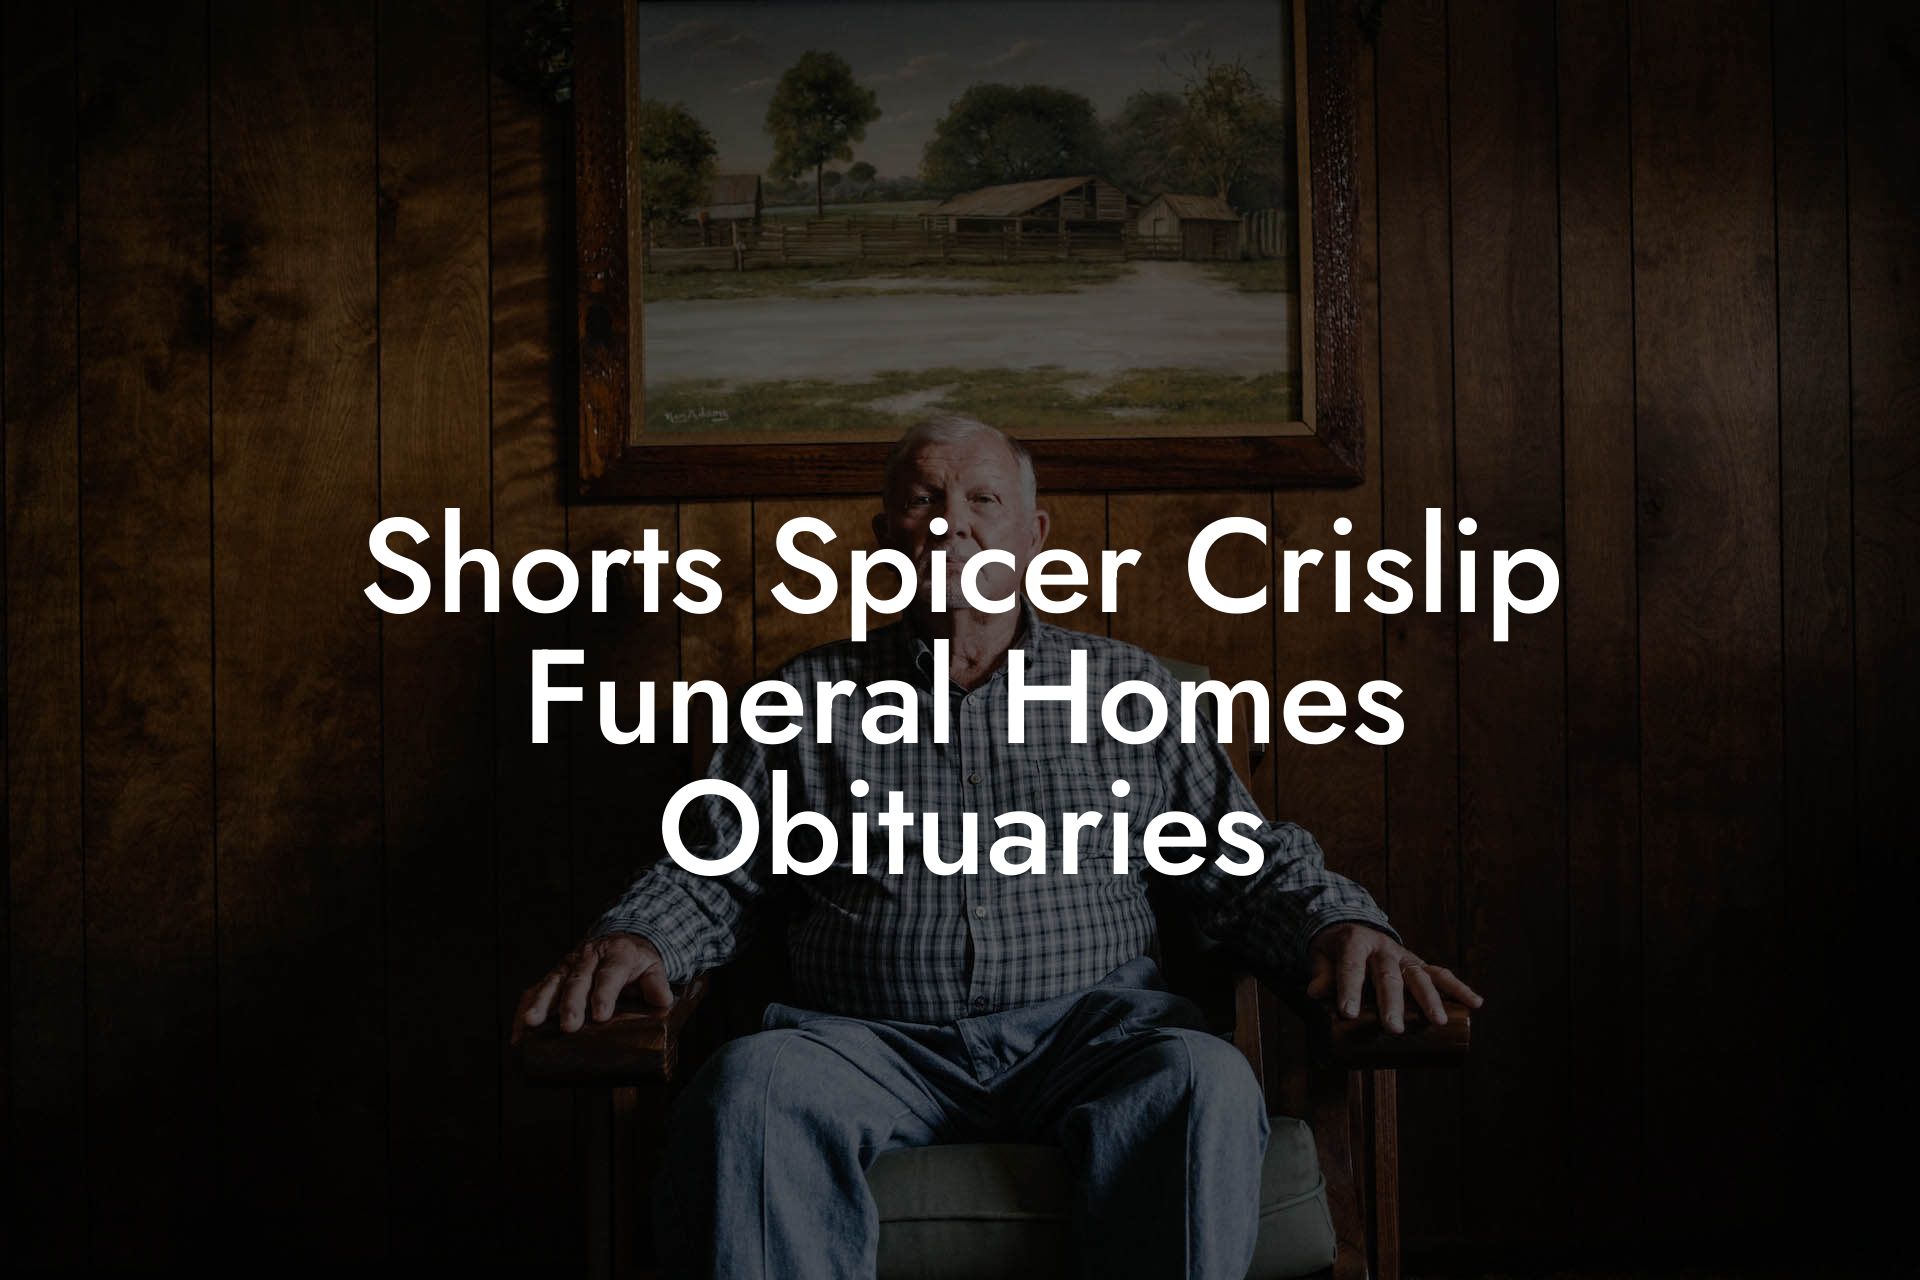 Shorts Spicer Crislip Funeral Homes Obituaries